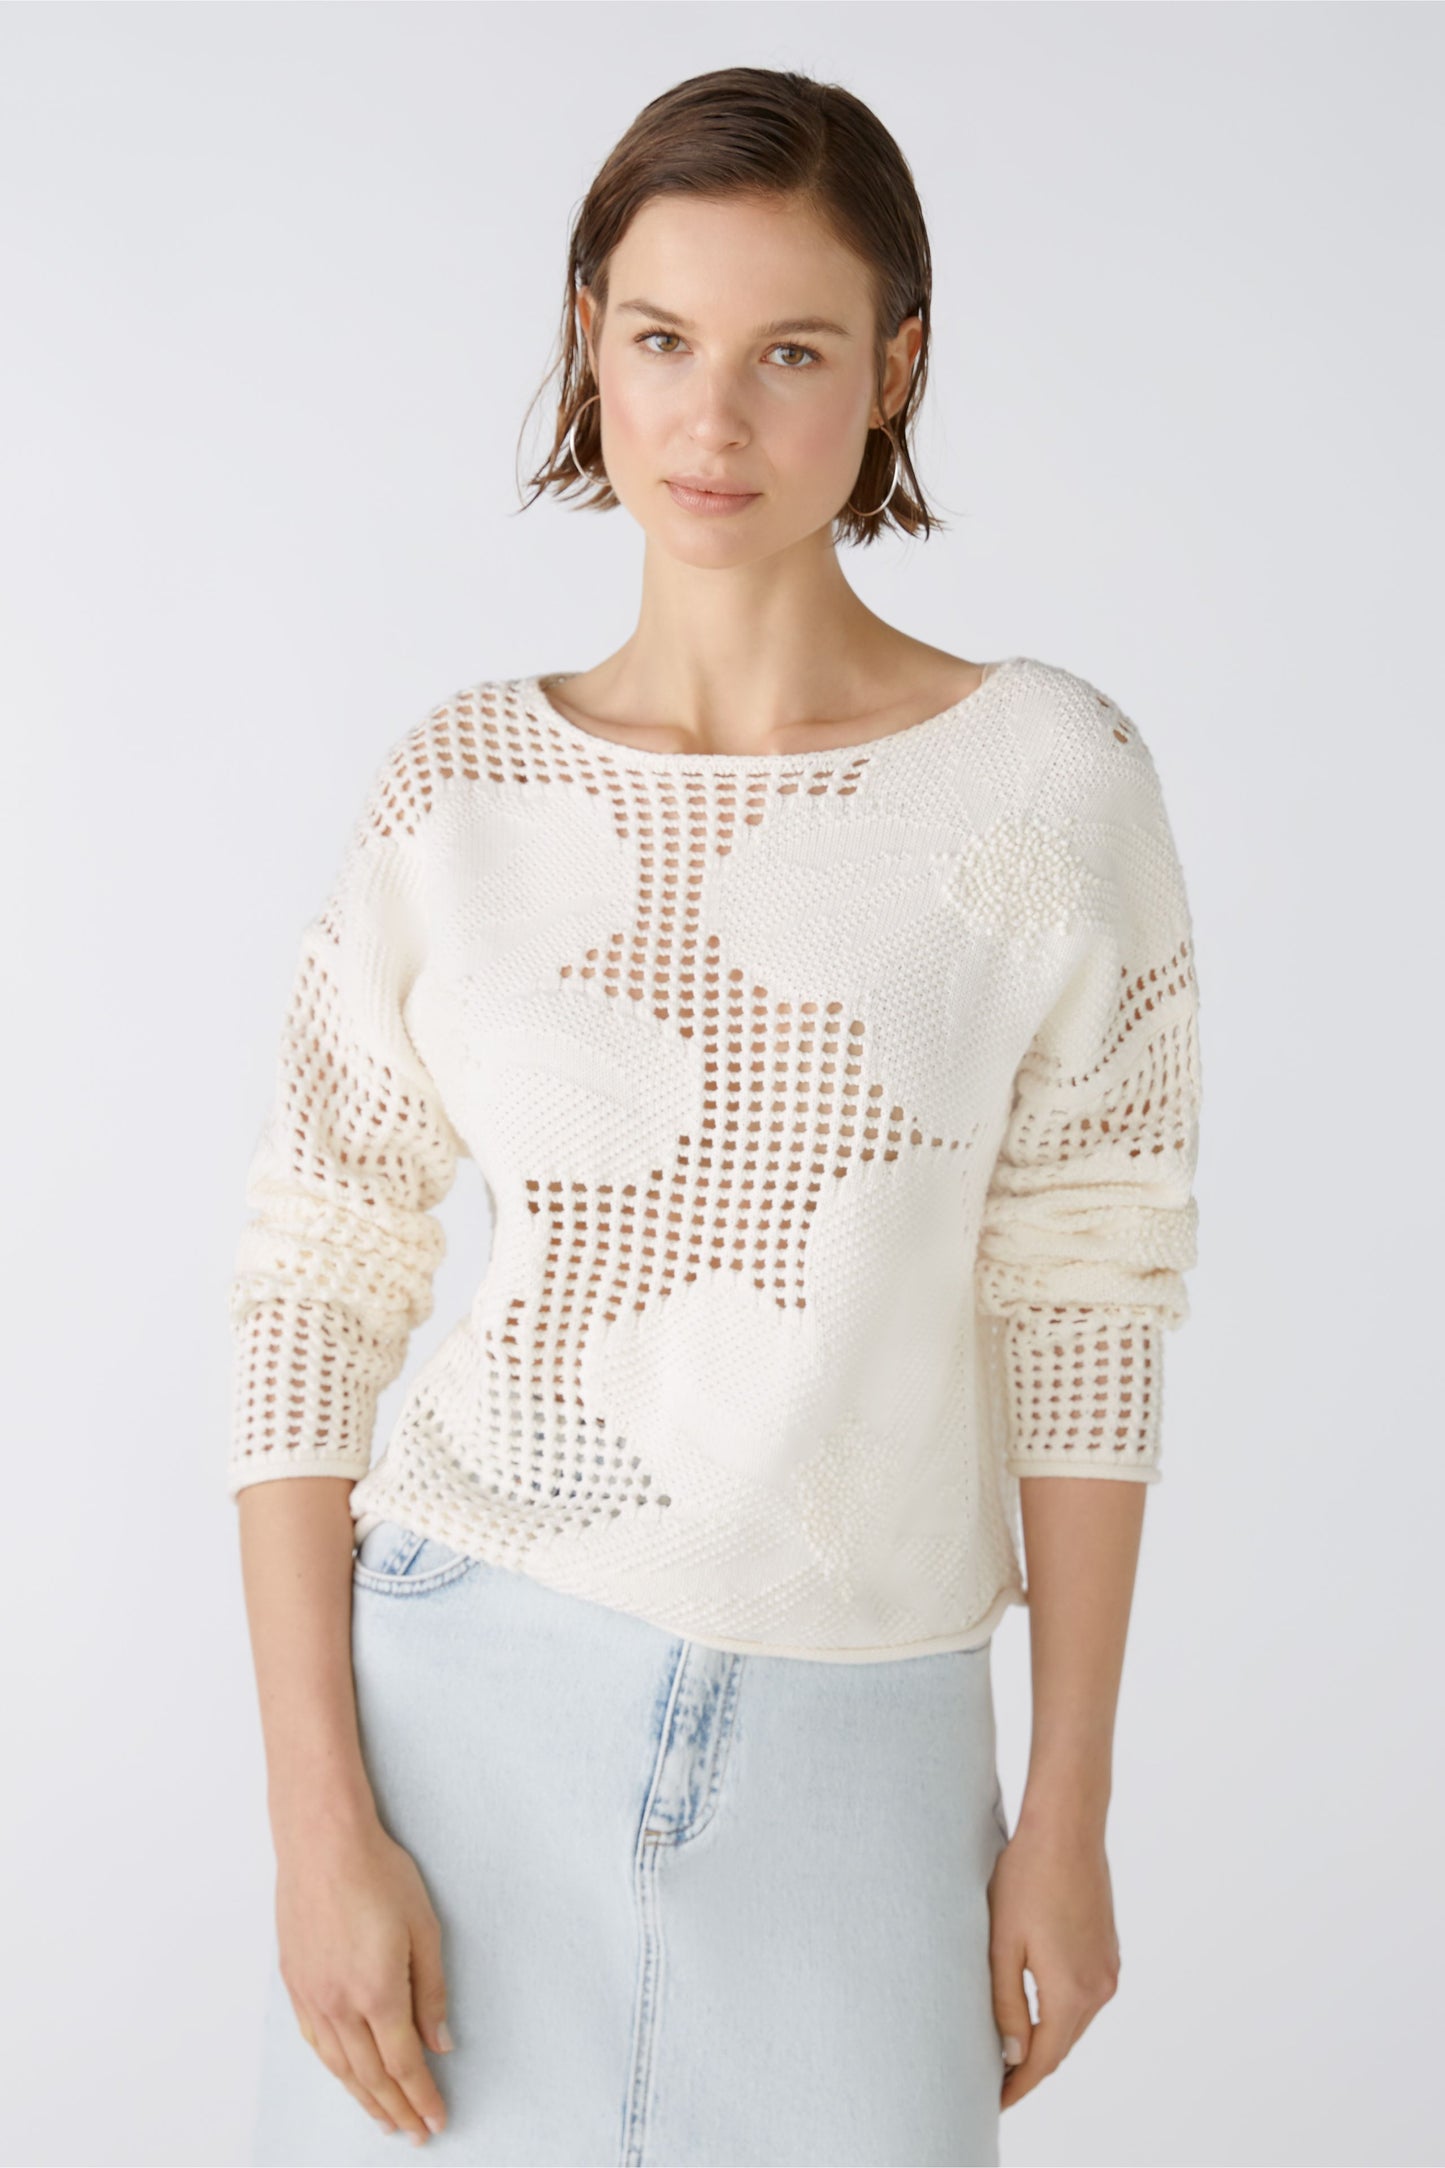 Oui 86664 cotton holey knit sweater